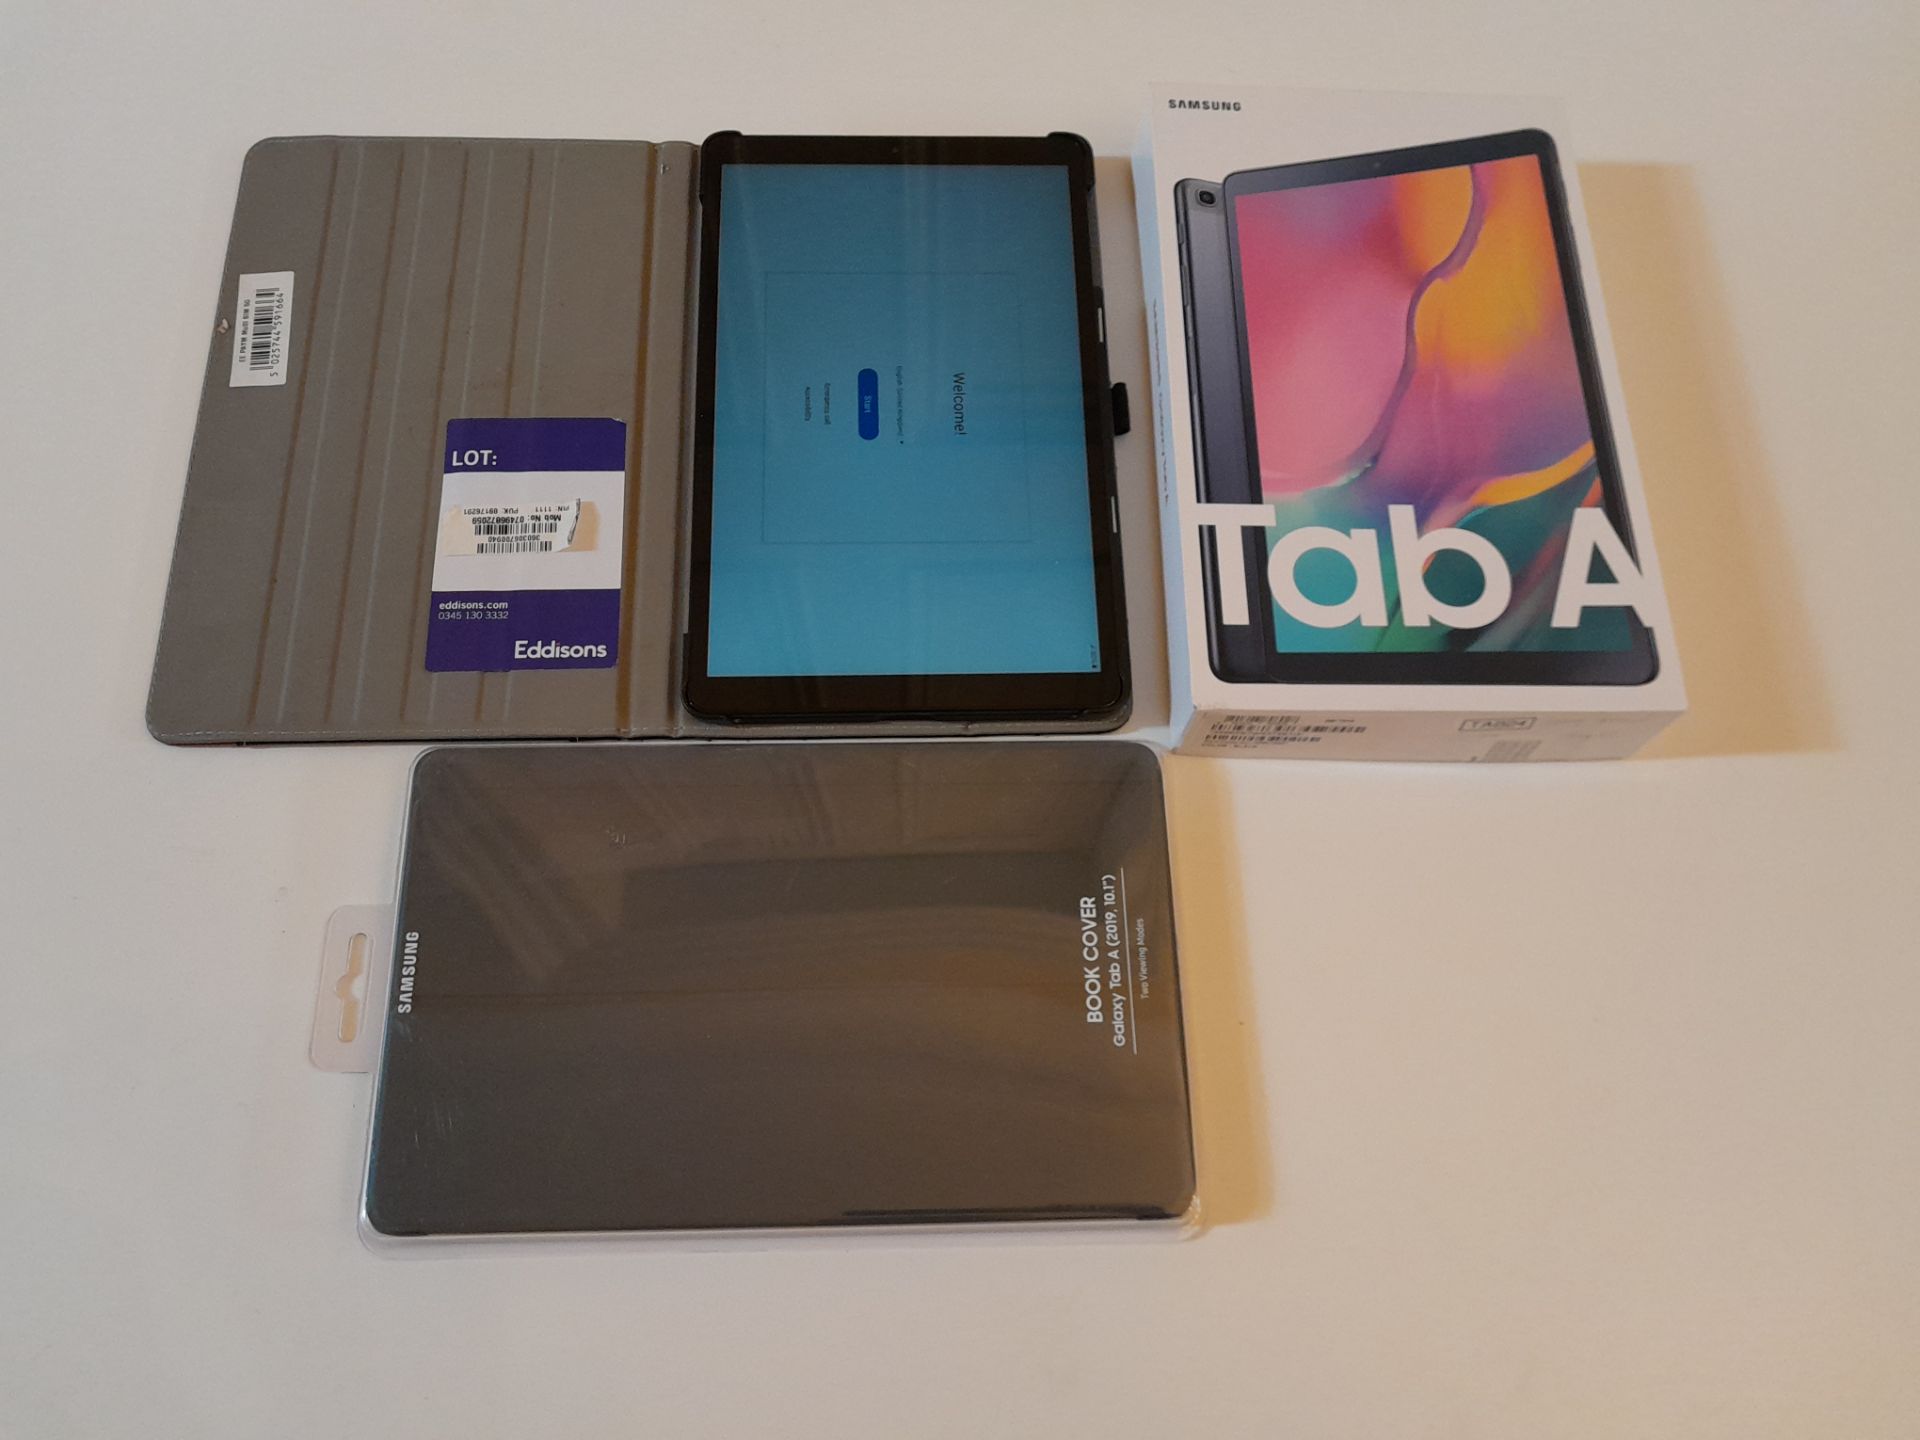 Samsung Galaxy Tab A, 32GB LTE, 64bit Octa Core Processor, 10.1in Screen, with case and box, (